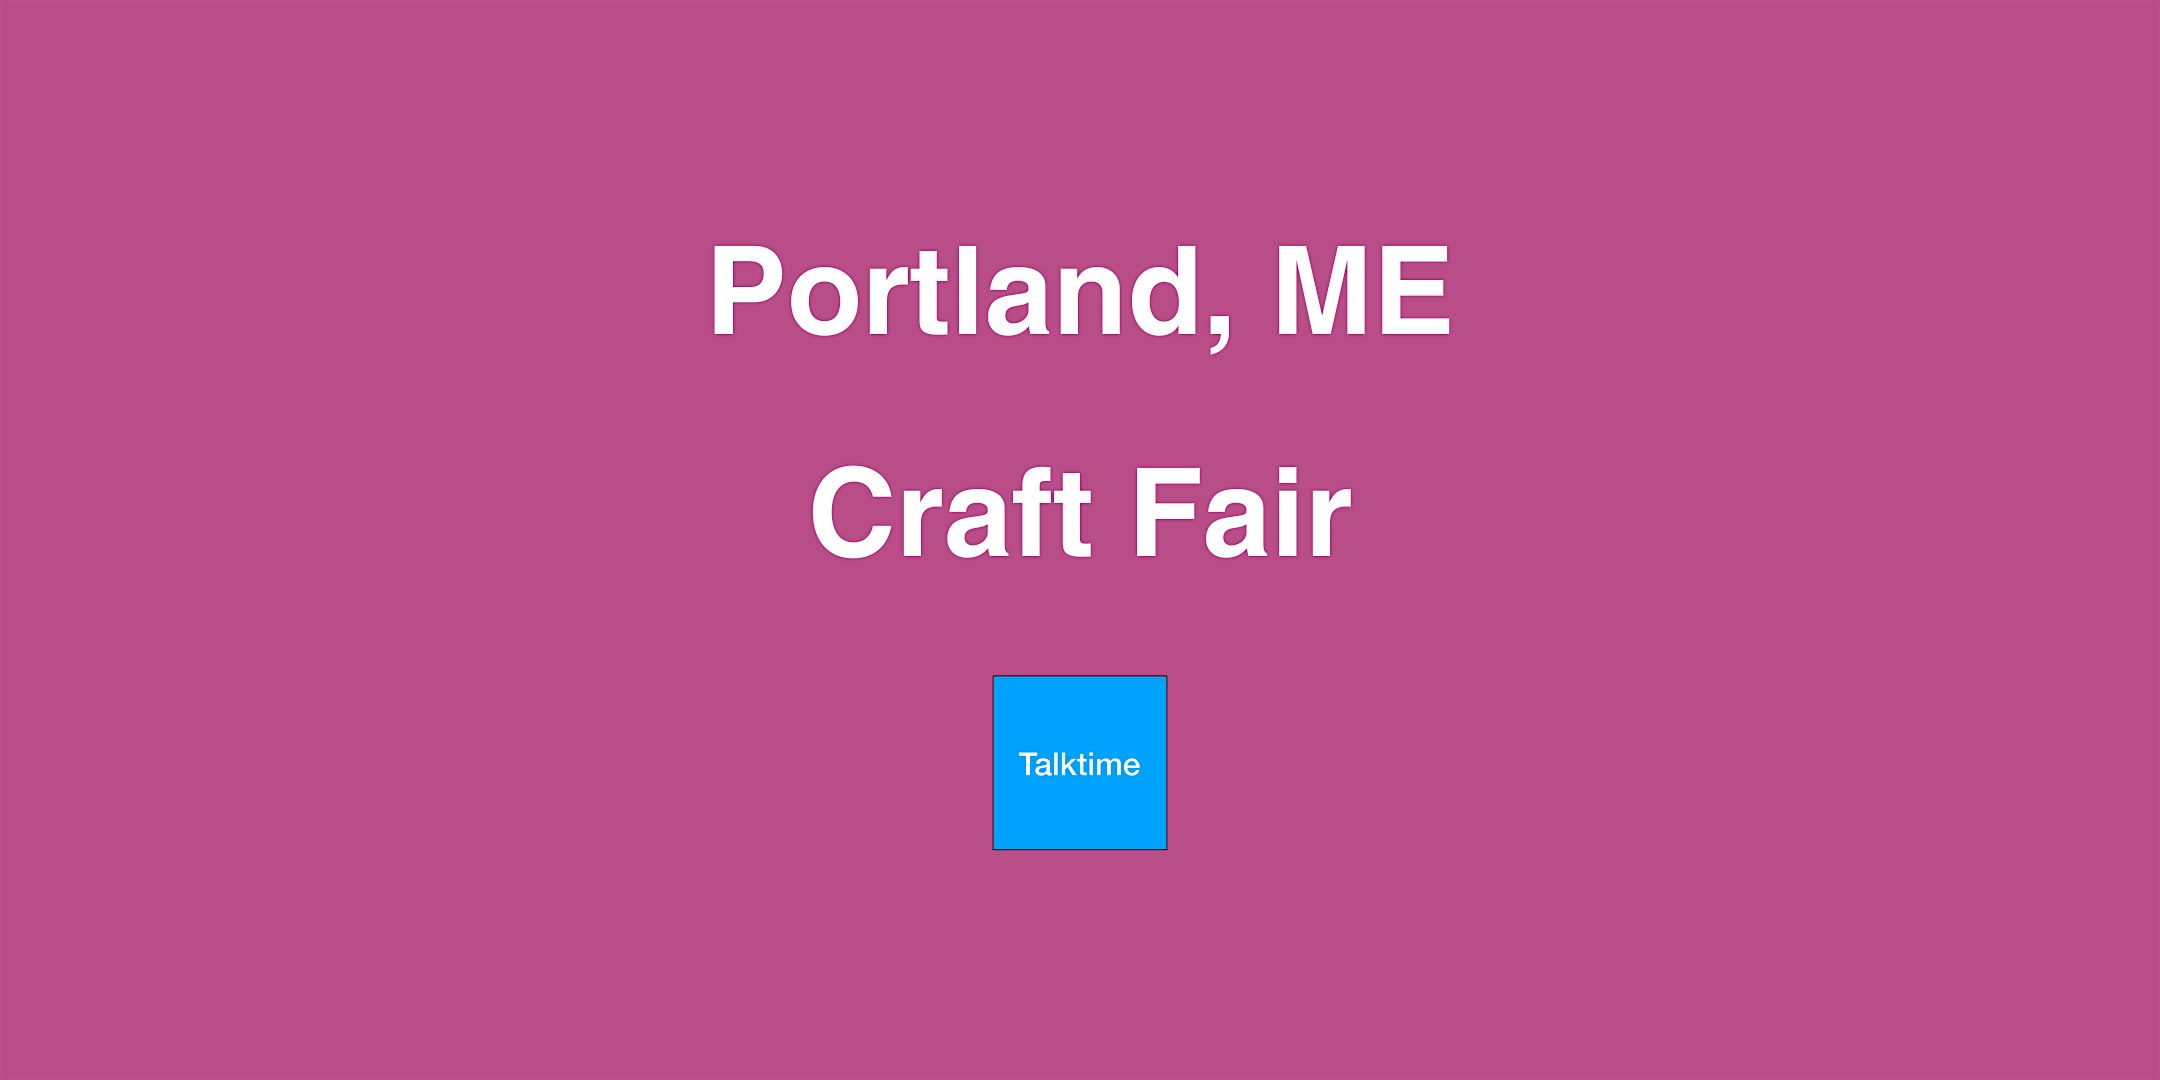 Craft Fair - Portland